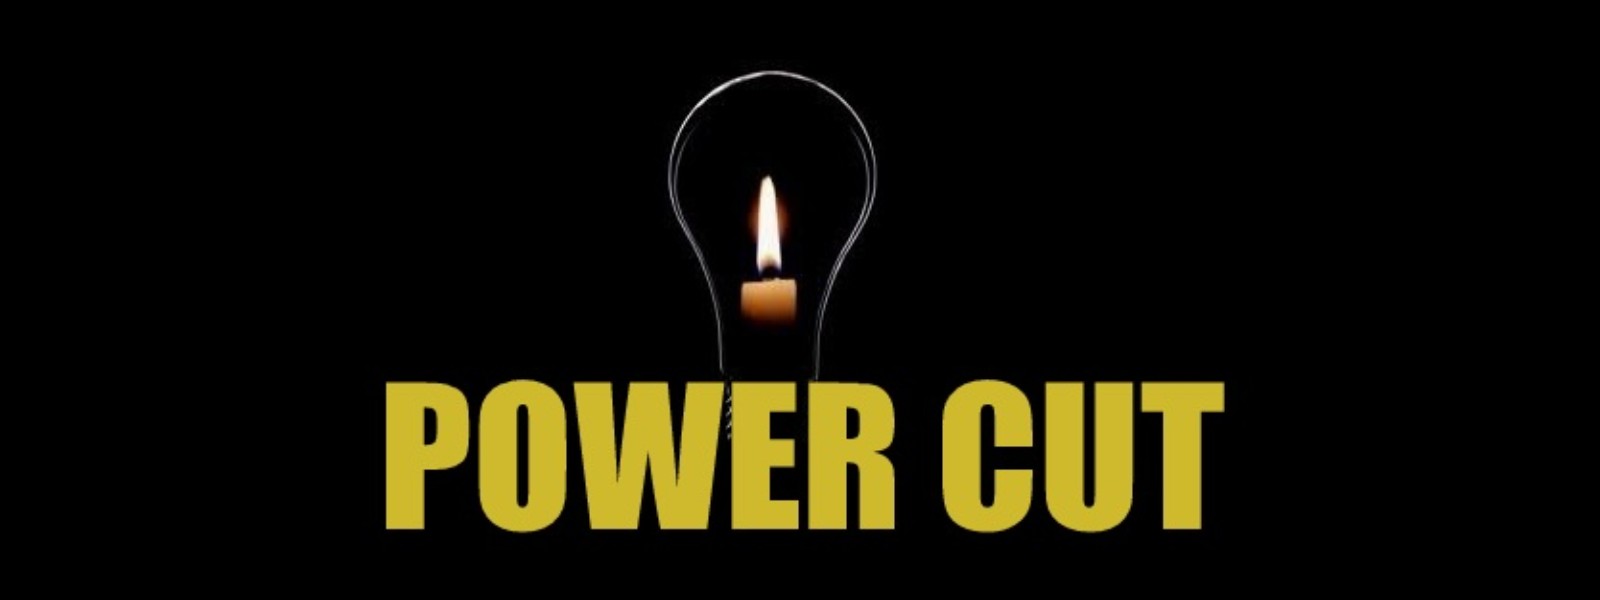 Power cuts or not? The tussle between Gammanpila, Lokuge & TUs